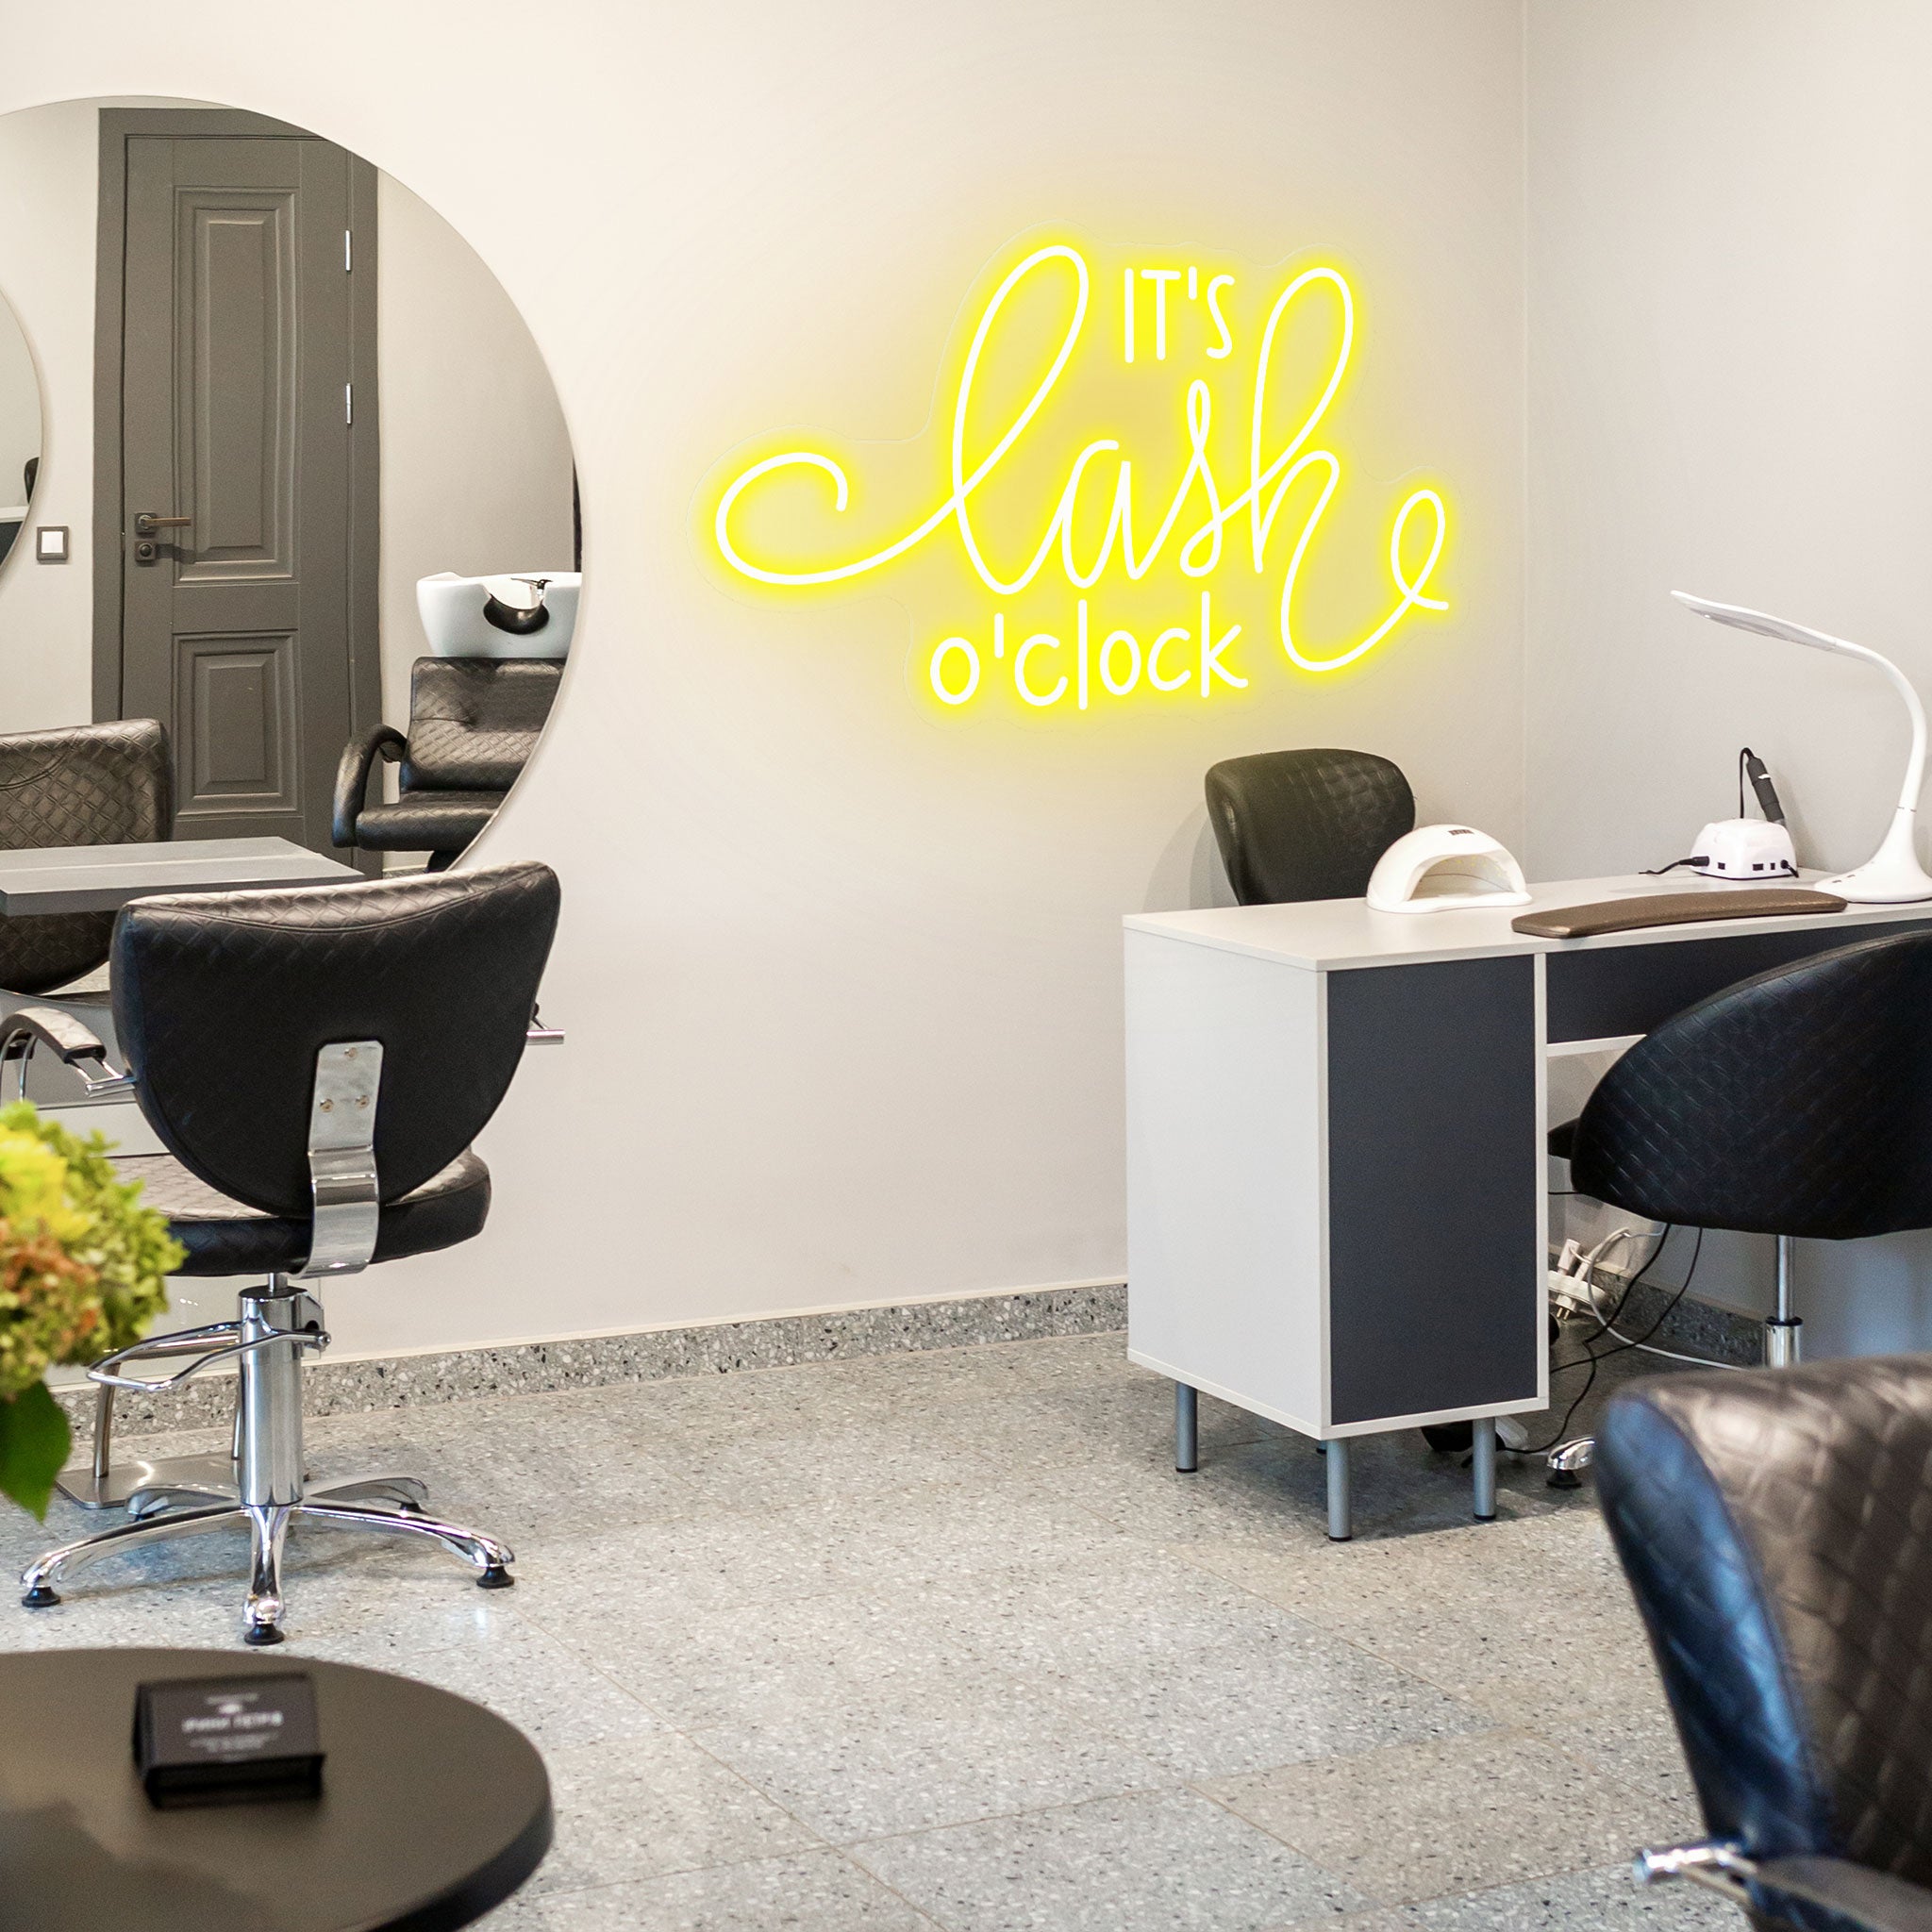 It's Lash O'Clock - Neon Sign - Salon / Beauty Clinic